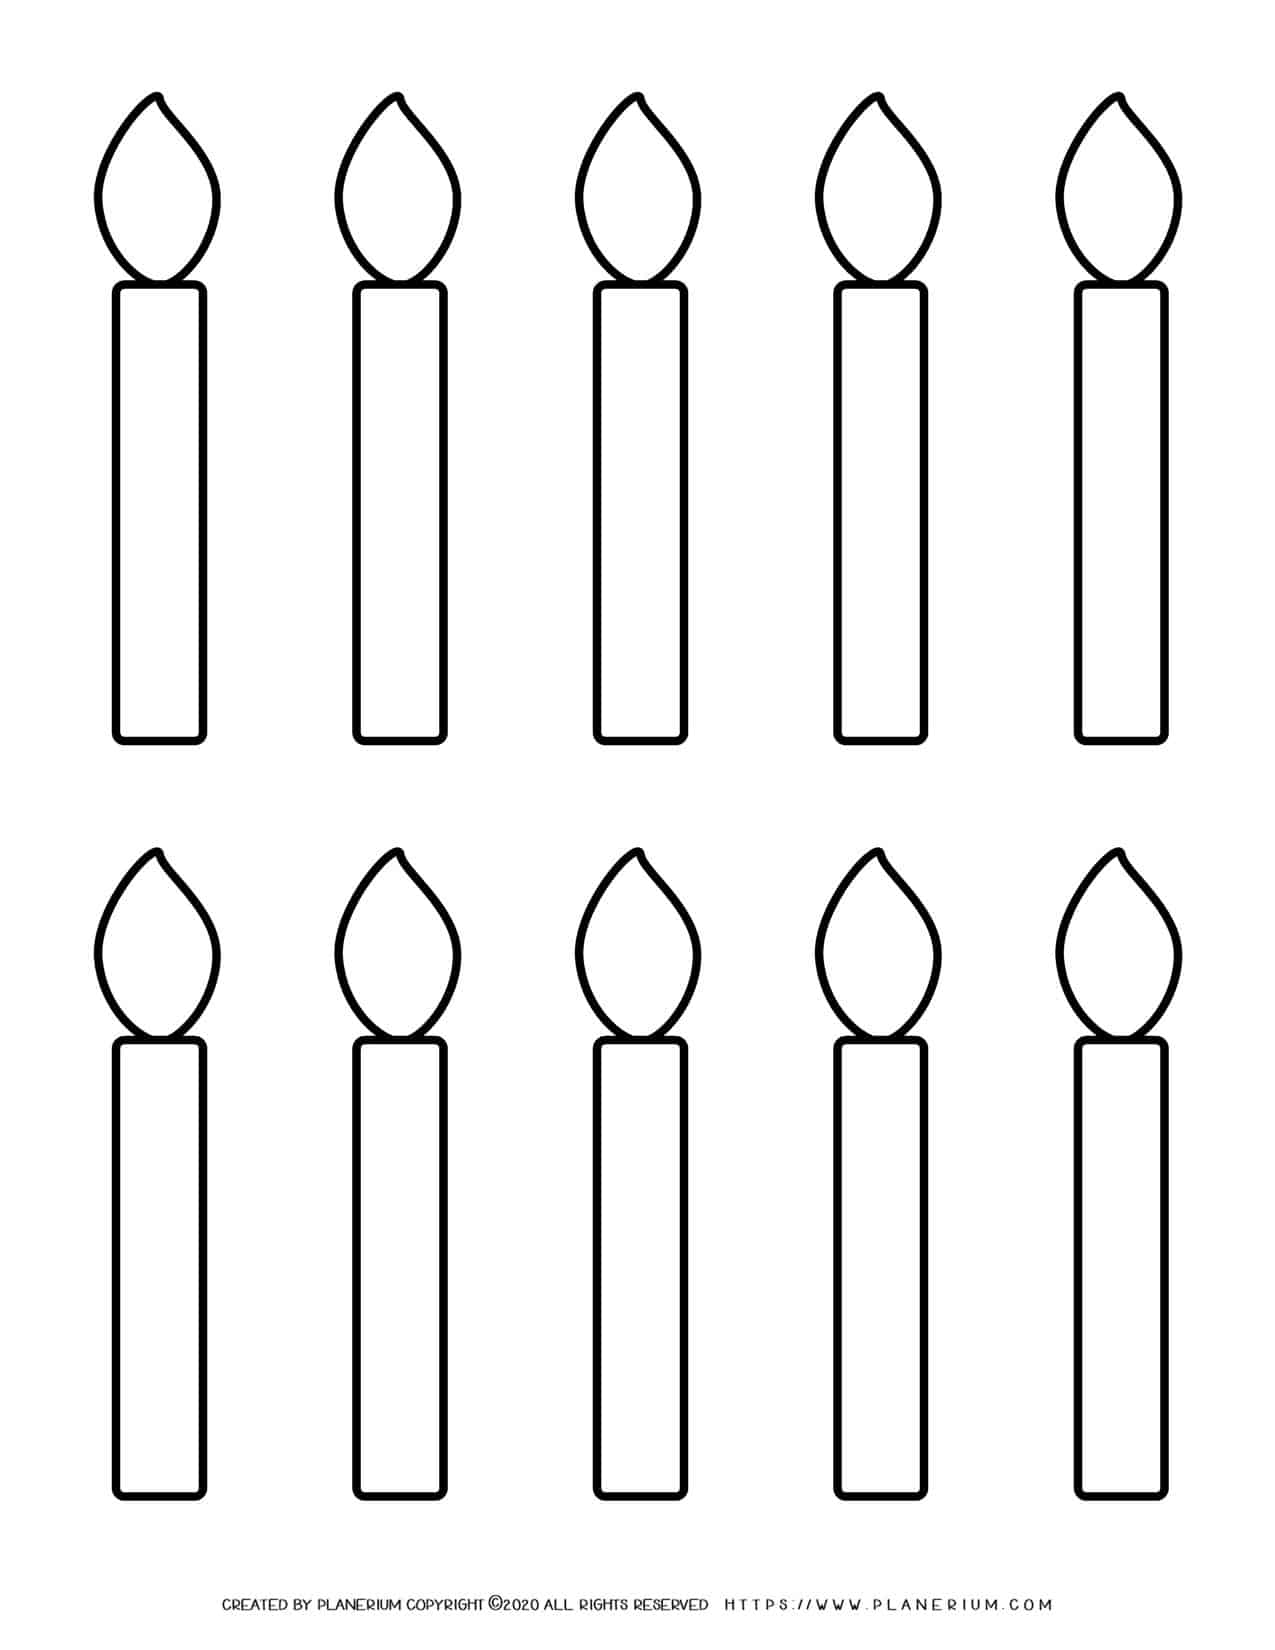 Hanukkah Coloring Pages - Ten Small Candles | Planerium